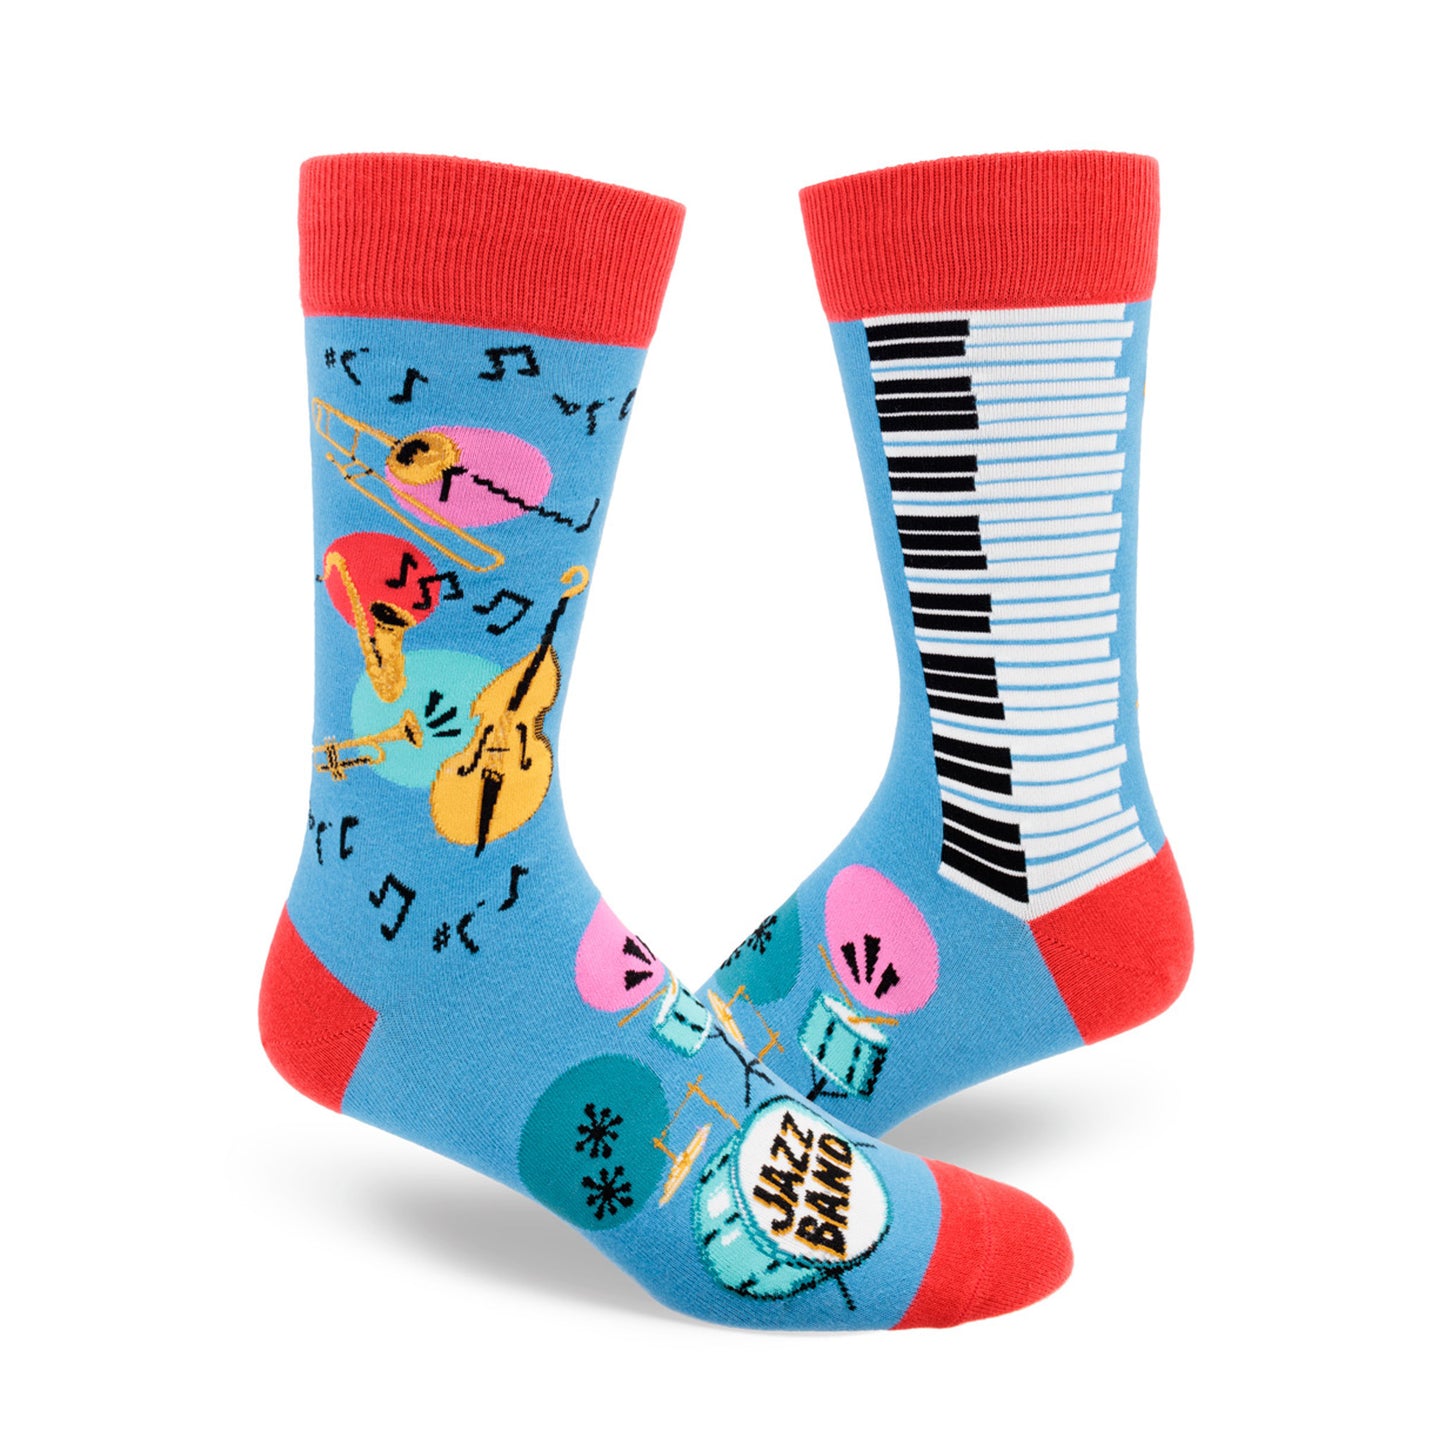 Jazz Band Men’s Socks